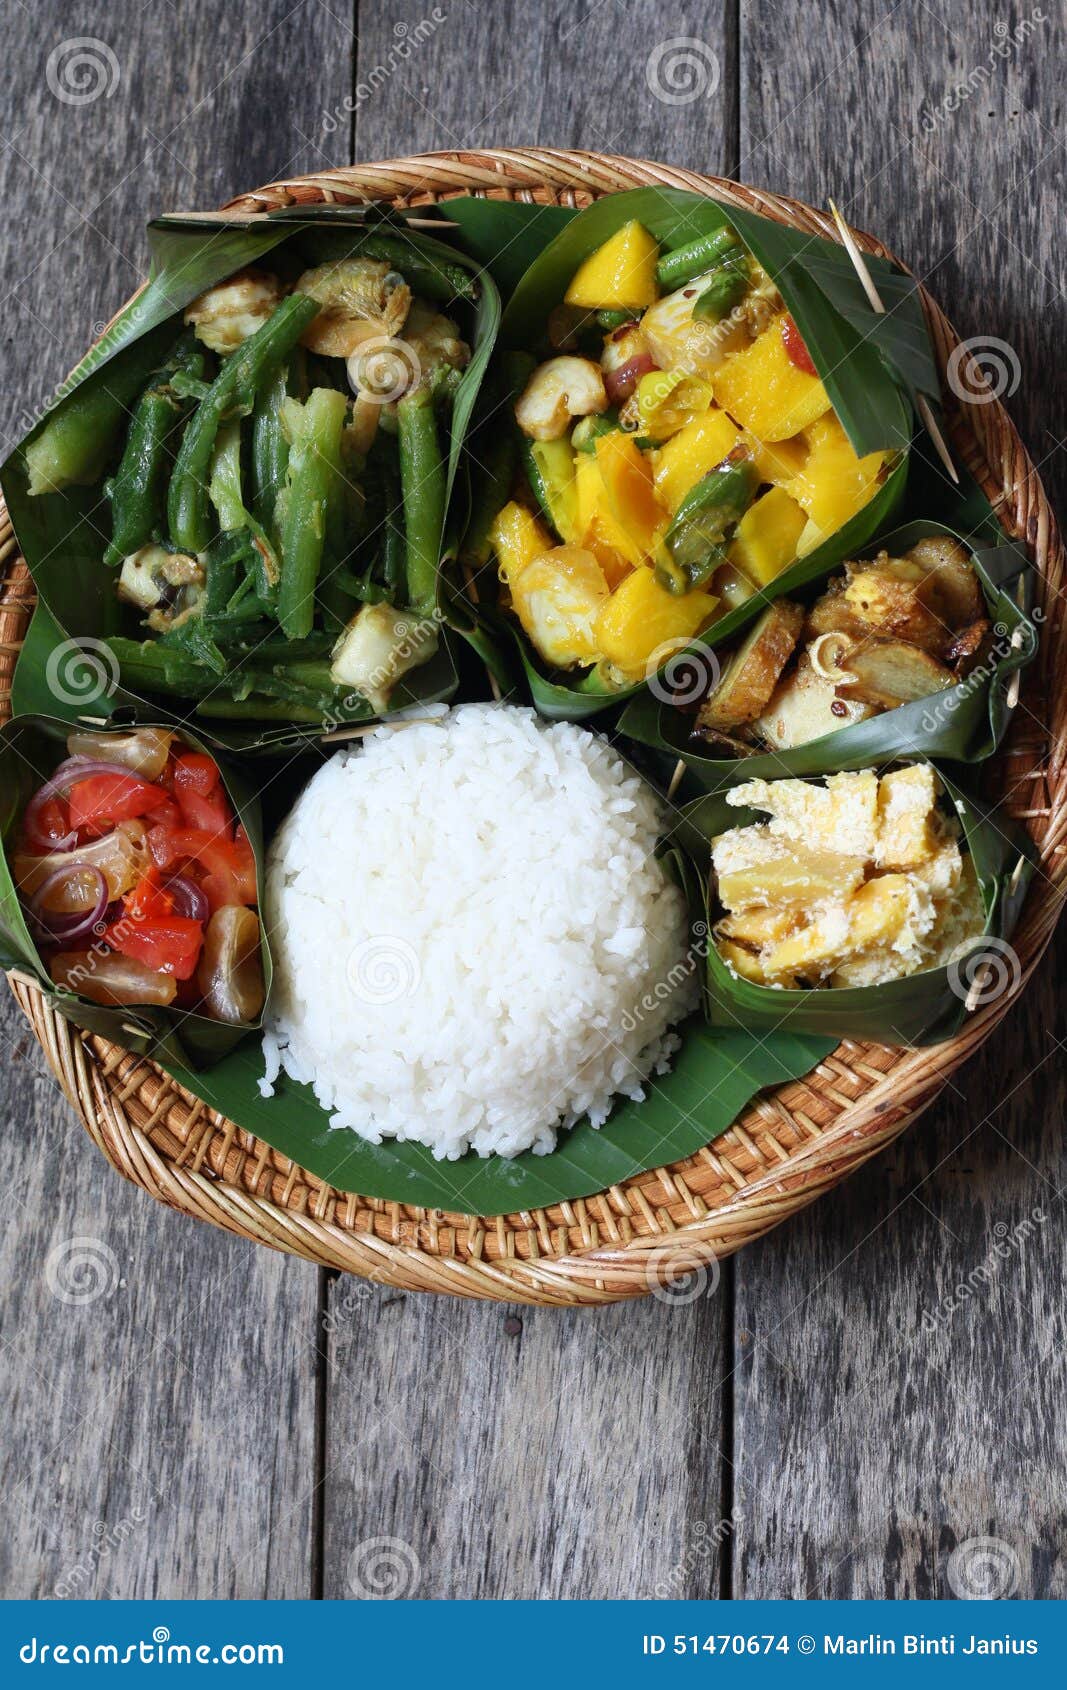 Kadazan Dusun Food stock photo. Image of kaamatan, festival - 51470674